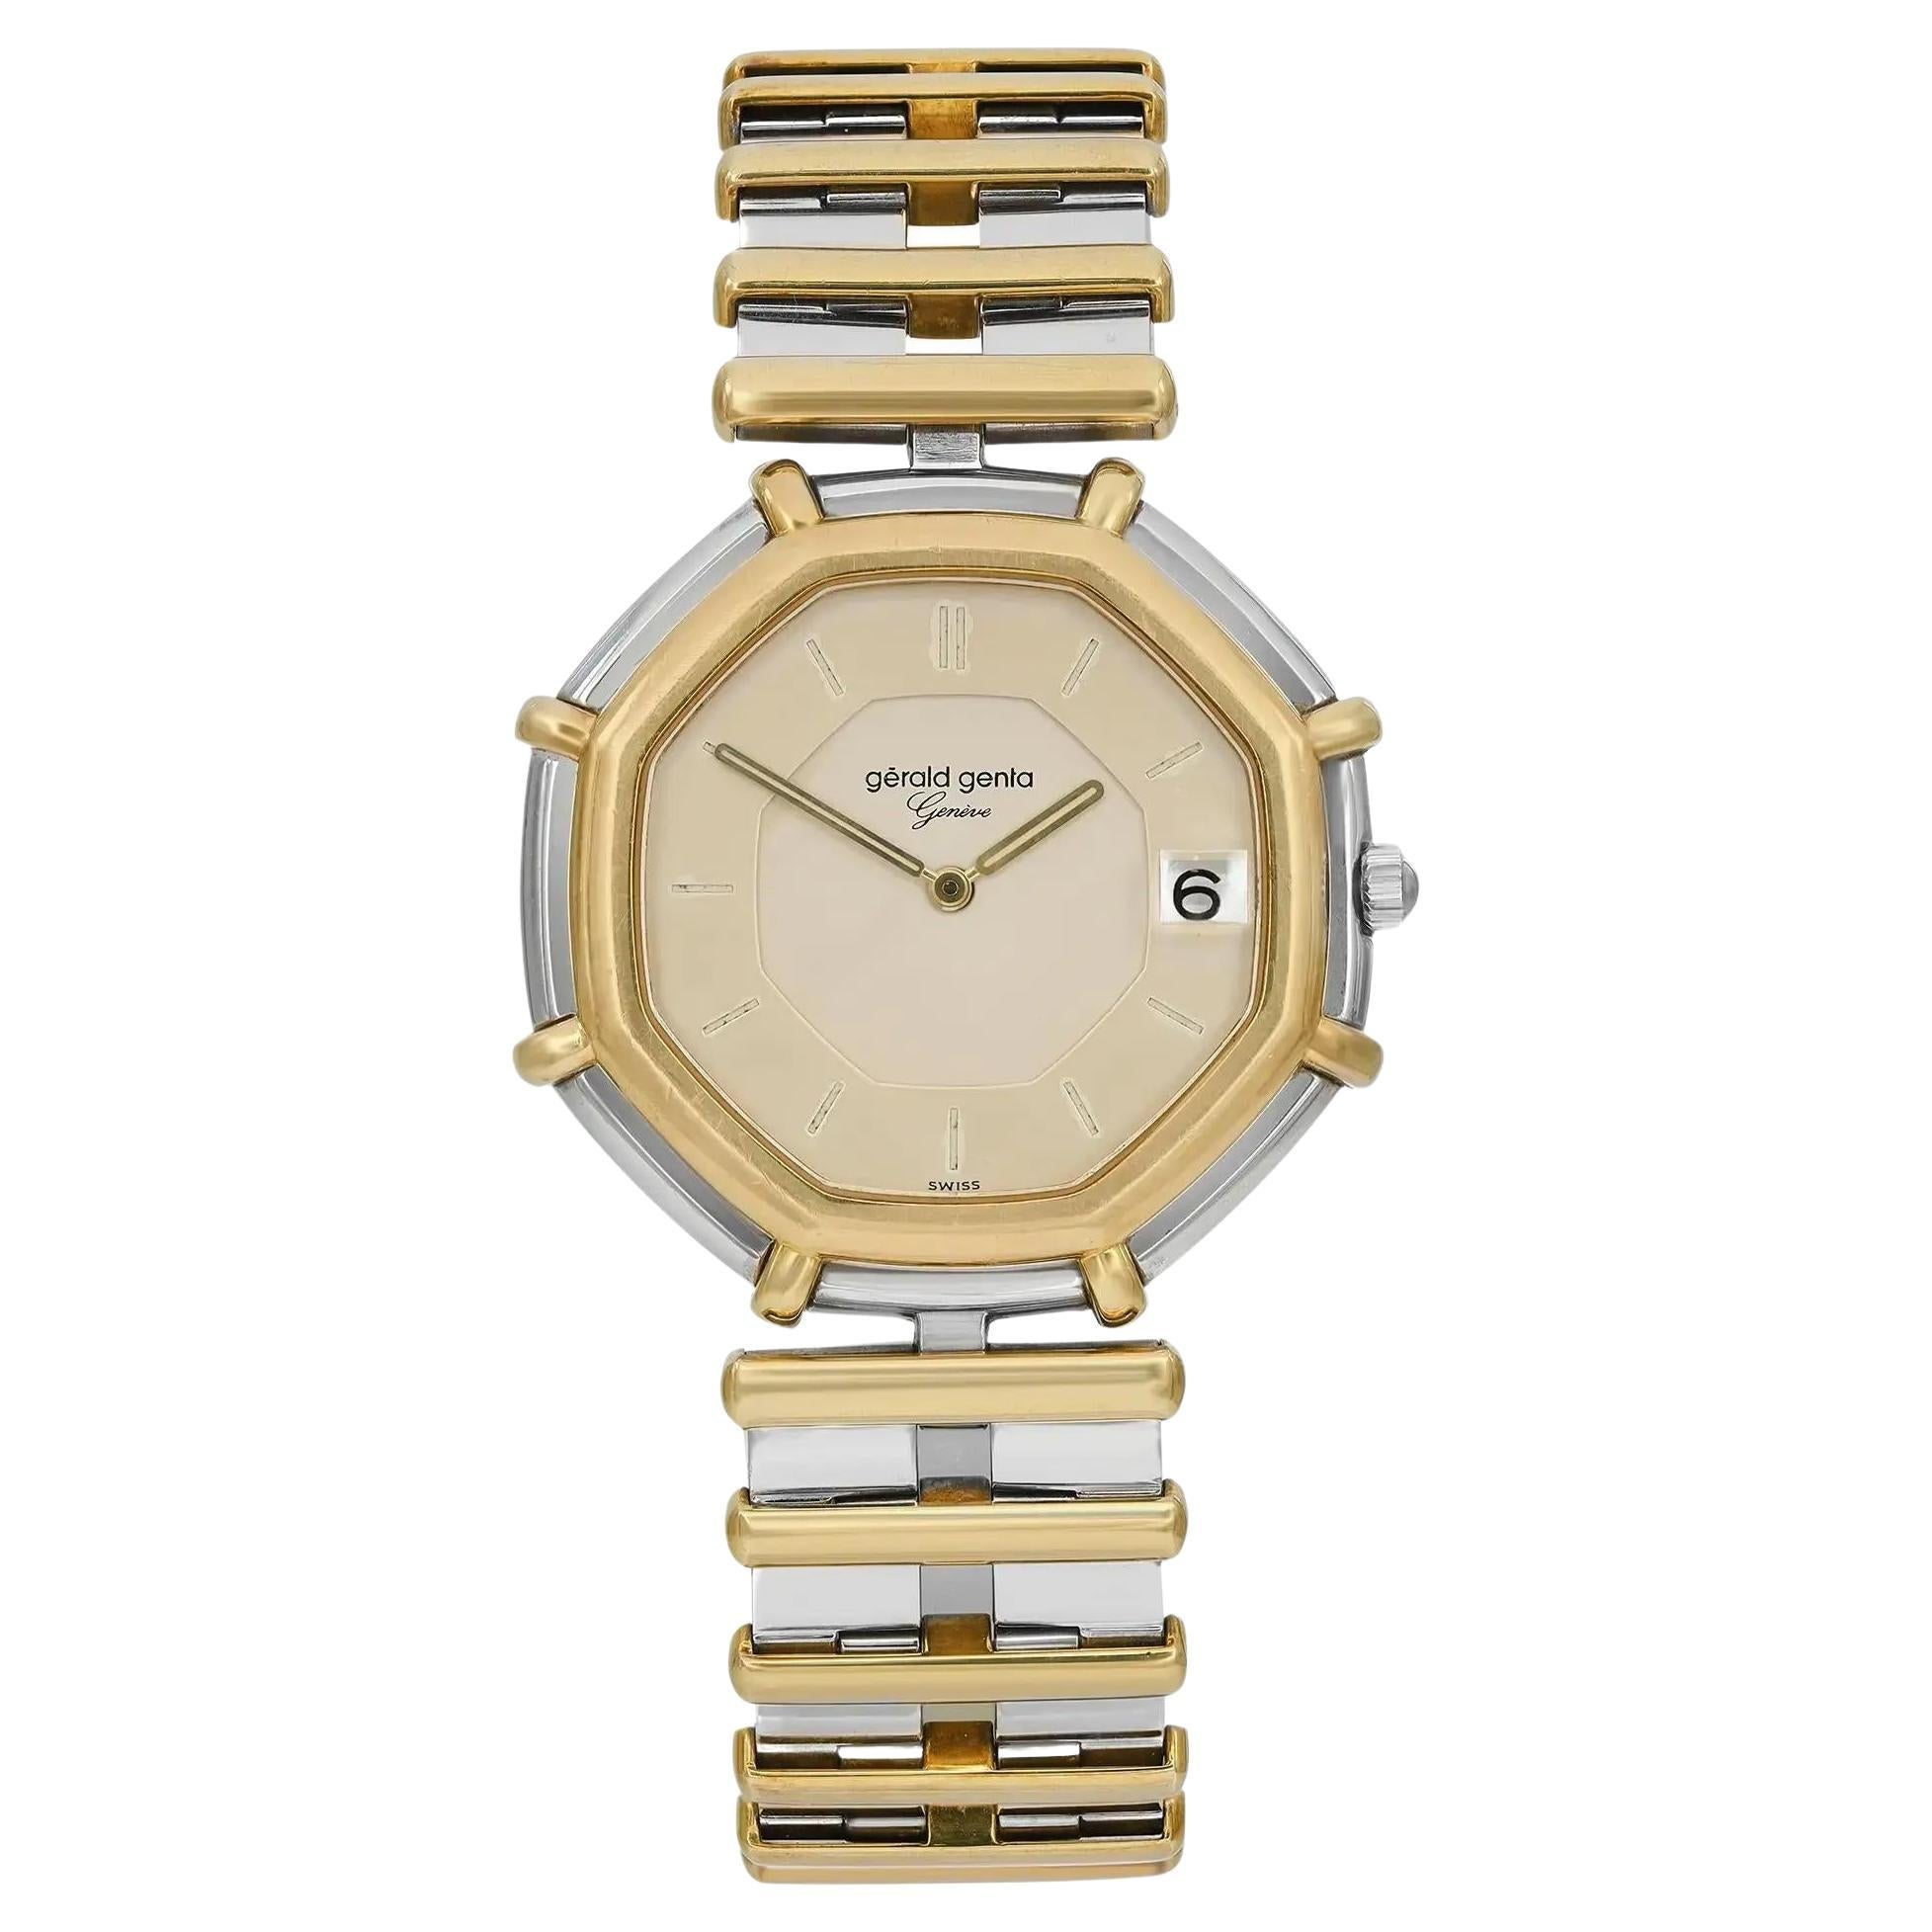 Gerald Genta Octagonal 18K Yellow Gold Steel Champagne Dial Watch G.2860.7